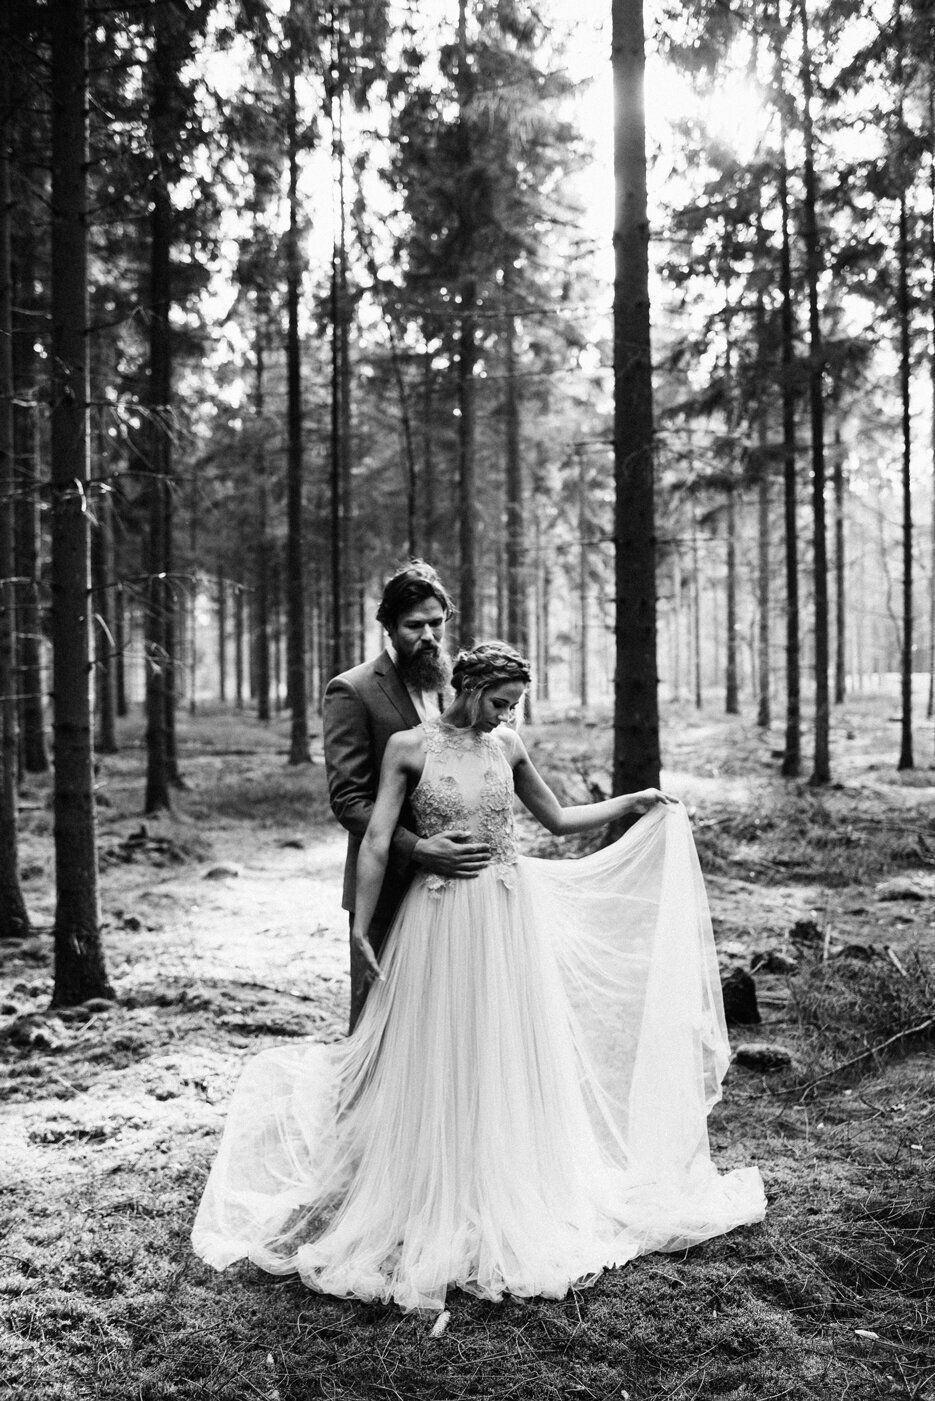 Styled Wedding Shoot - Marlon van Efferink Fotografie - 25